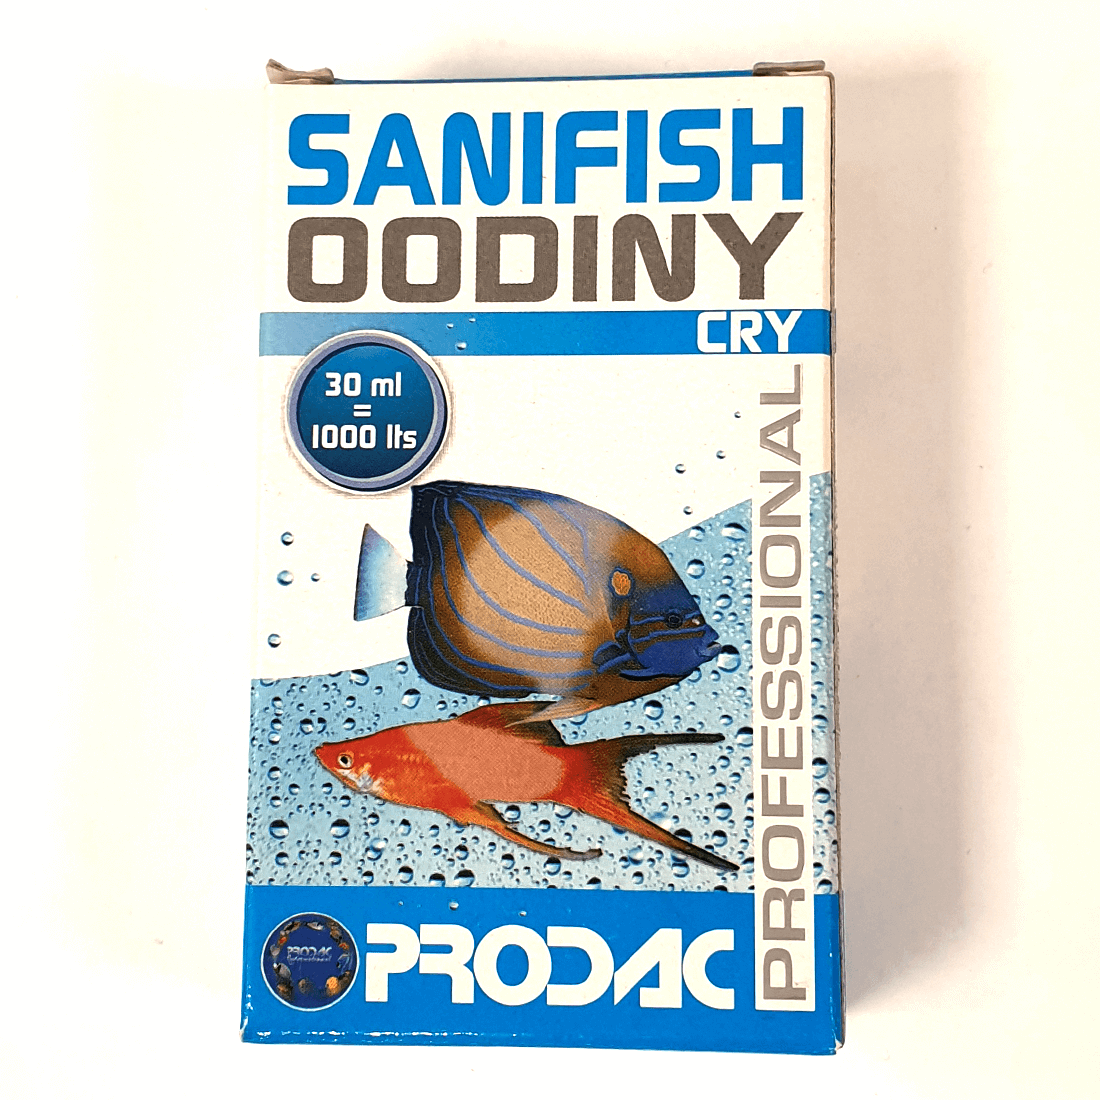 Tratament pentru pesti Prodac Sanifish Oodiny Cry 30ml